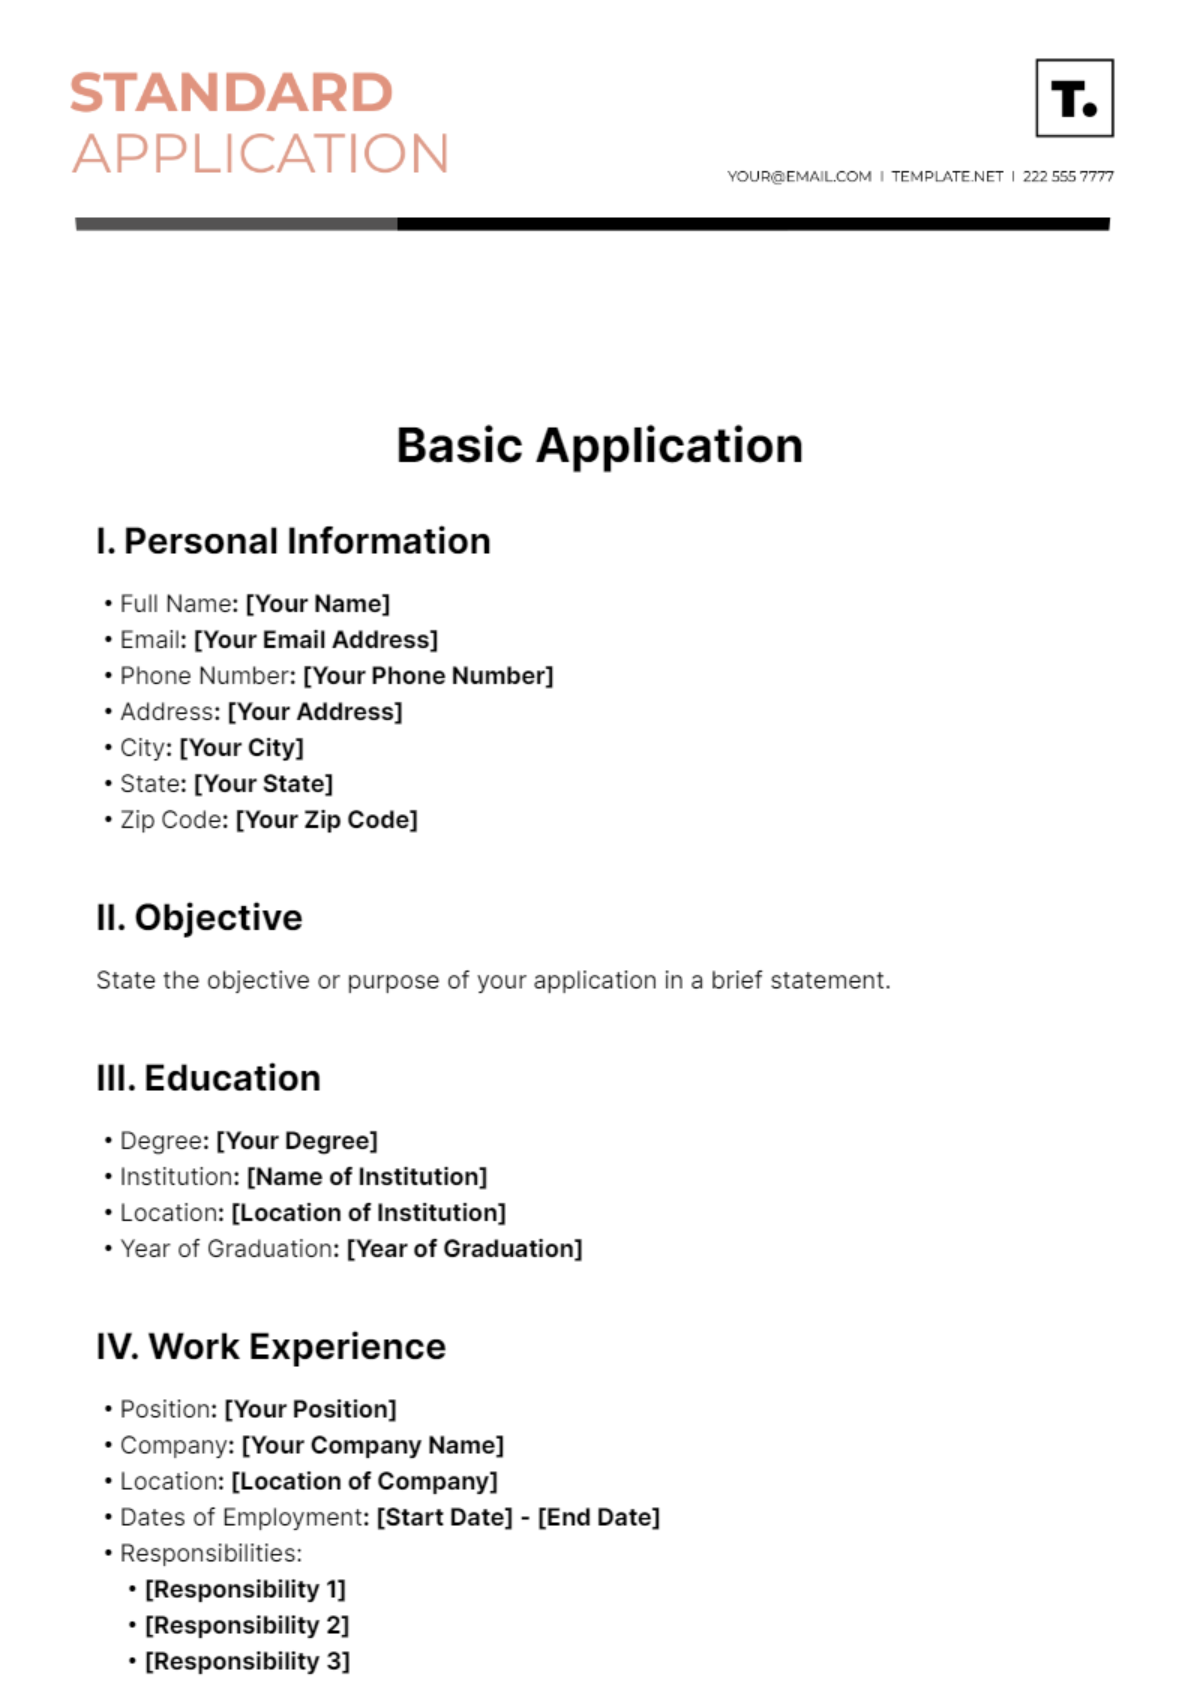 Basic Application Template